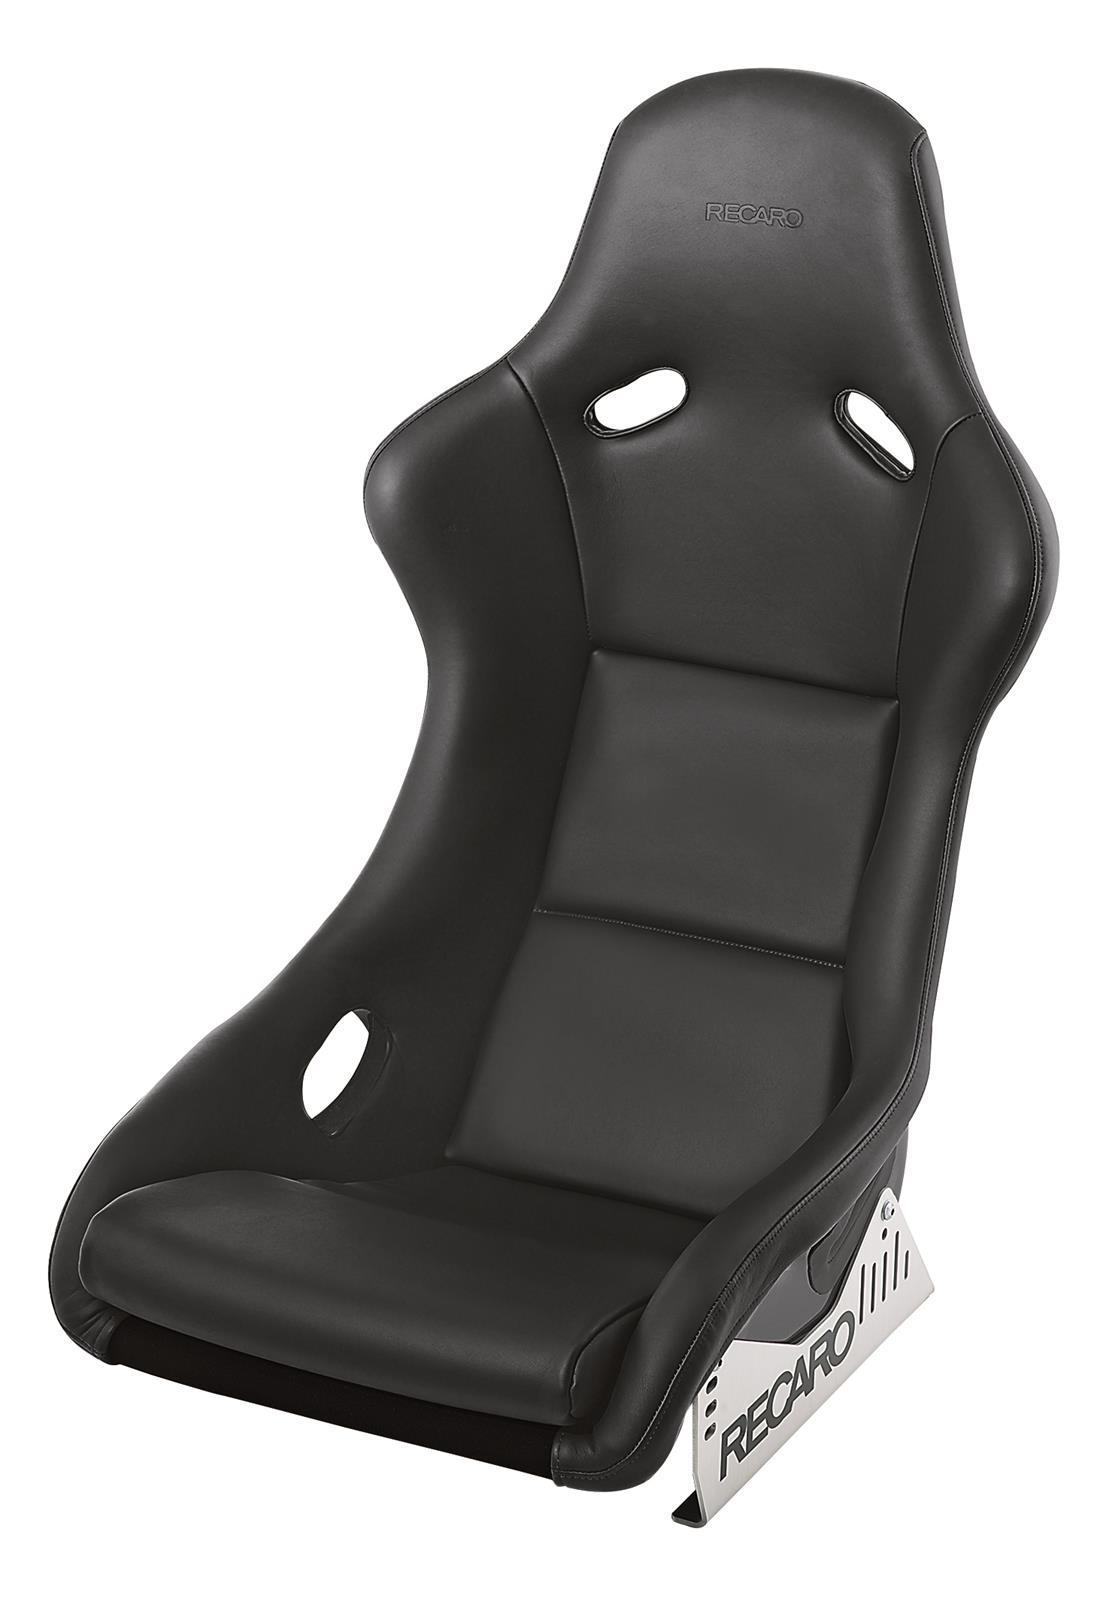 Recaro Pole Position N.G. Seat - Black Leather/Black Leather